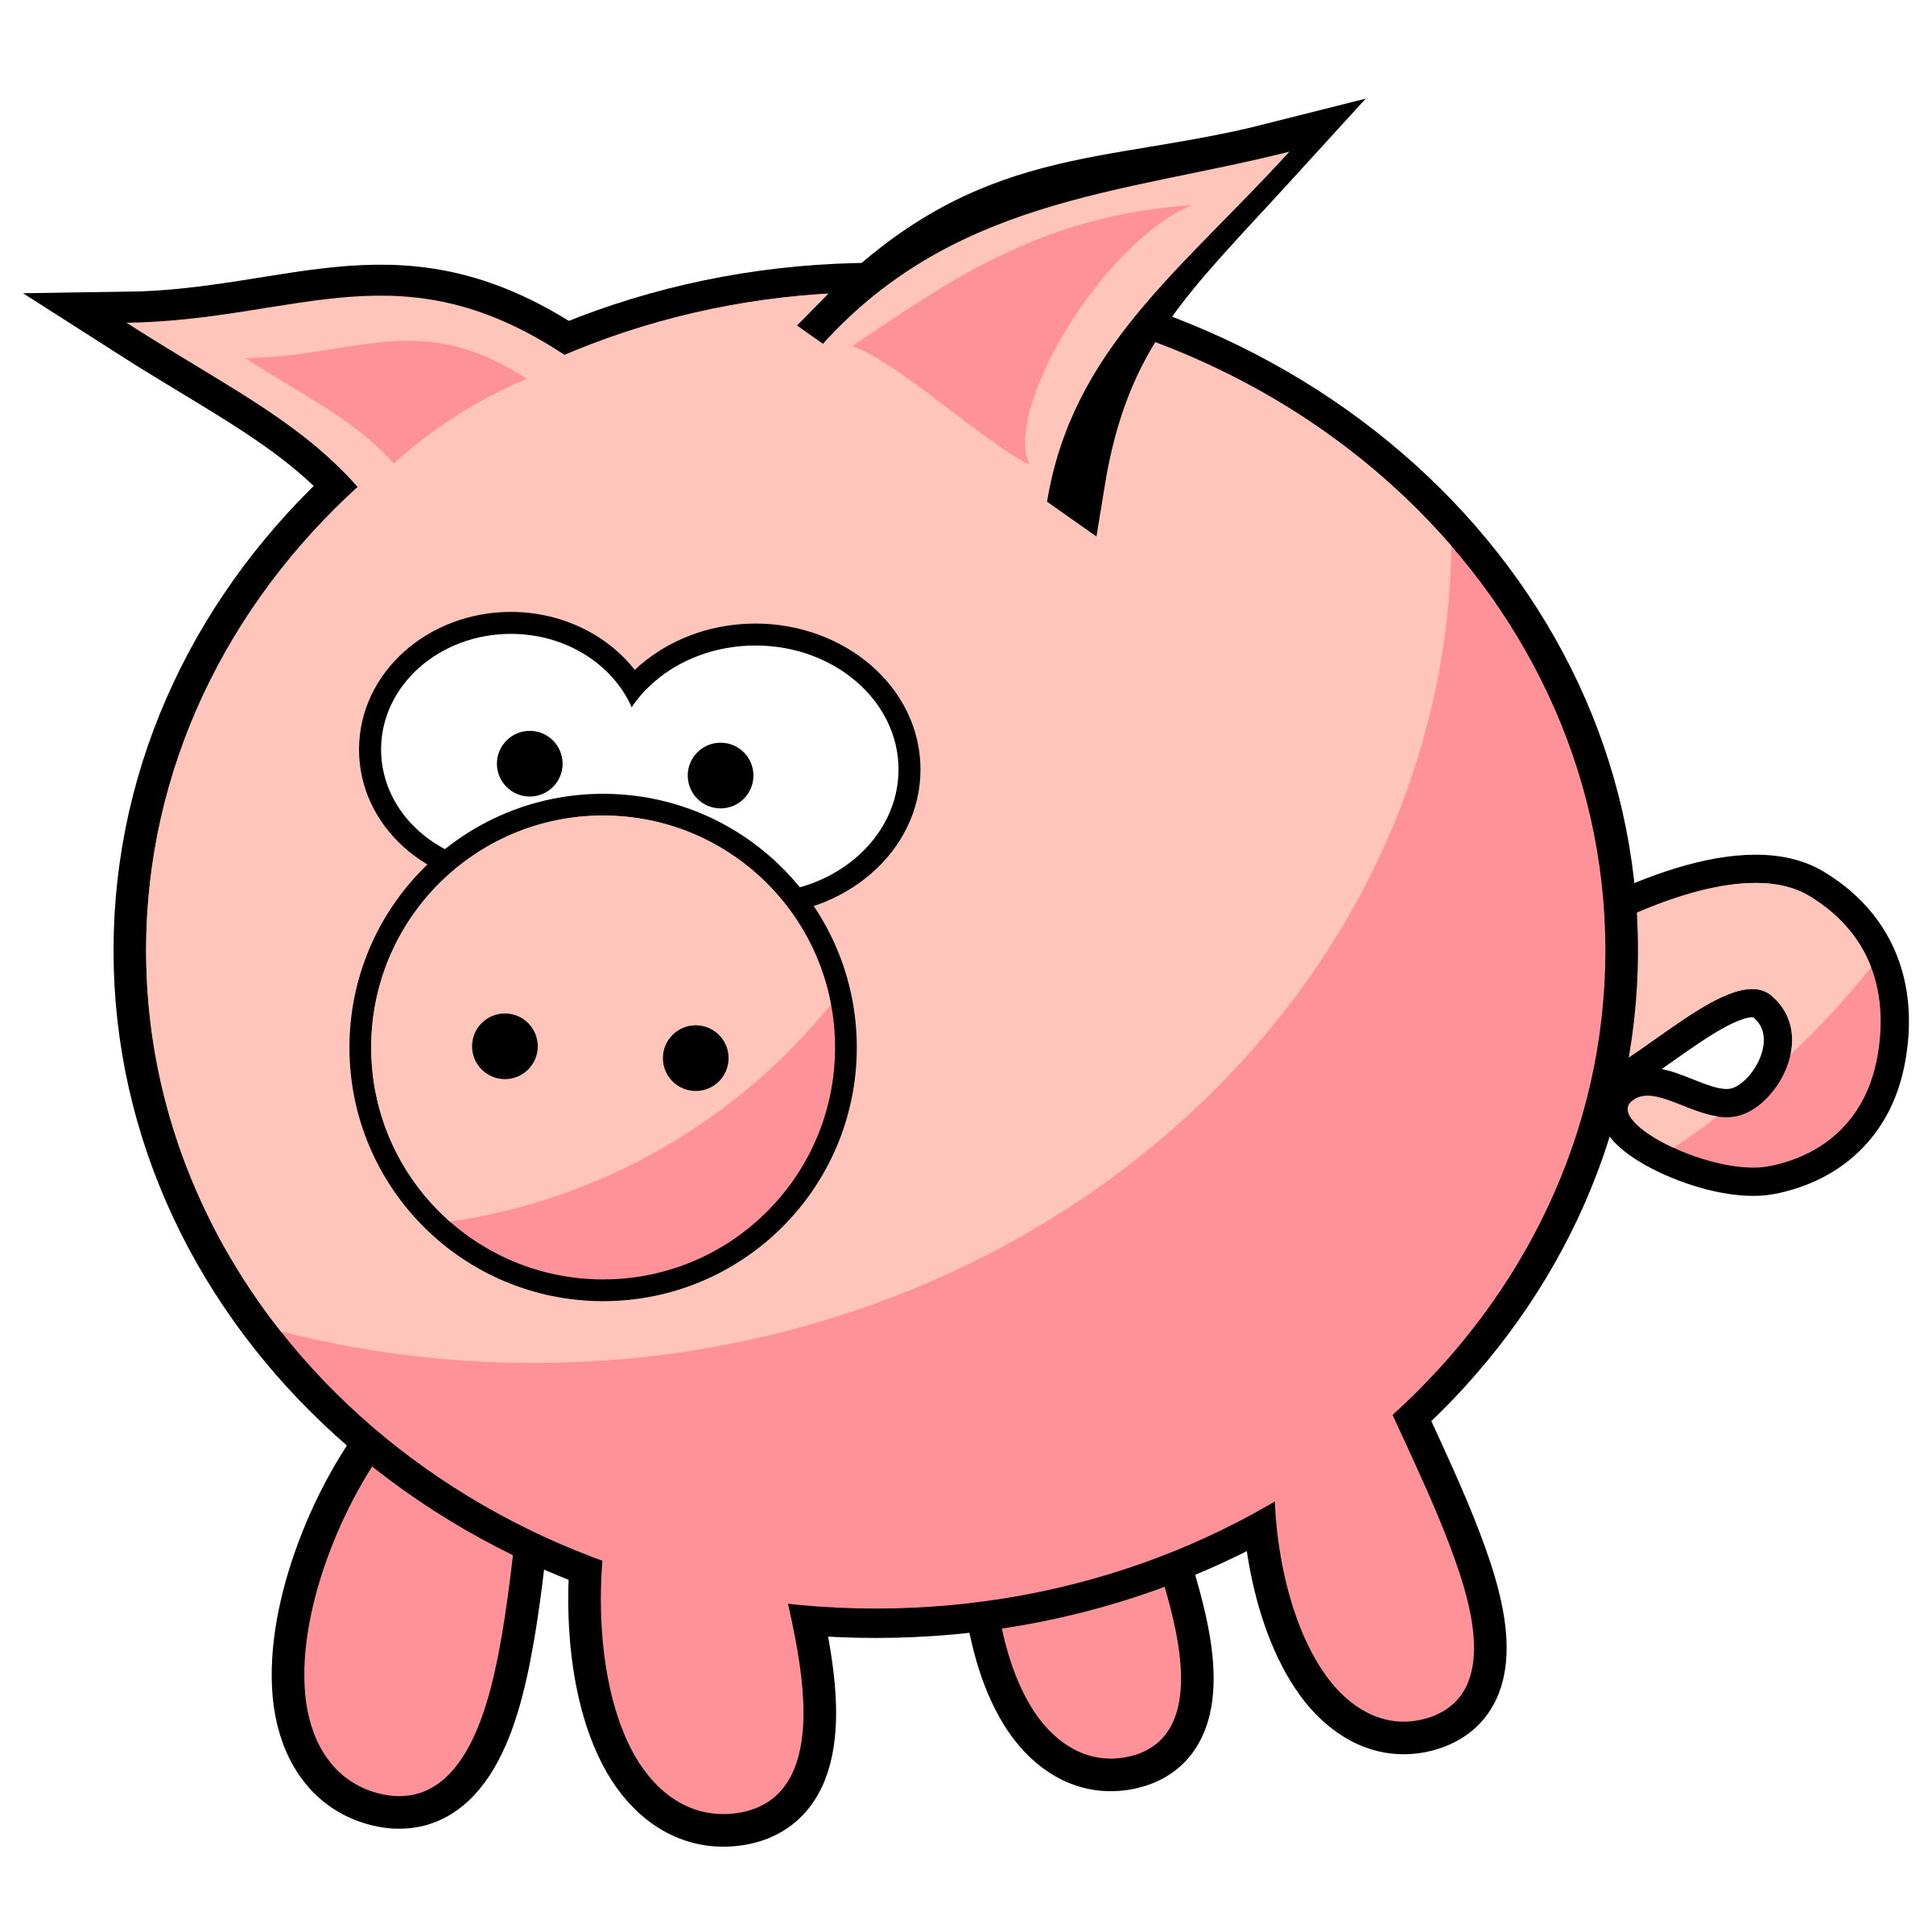 Download Pig Vector Art image - Free stock photo - Public Domain photo - CC0 Images